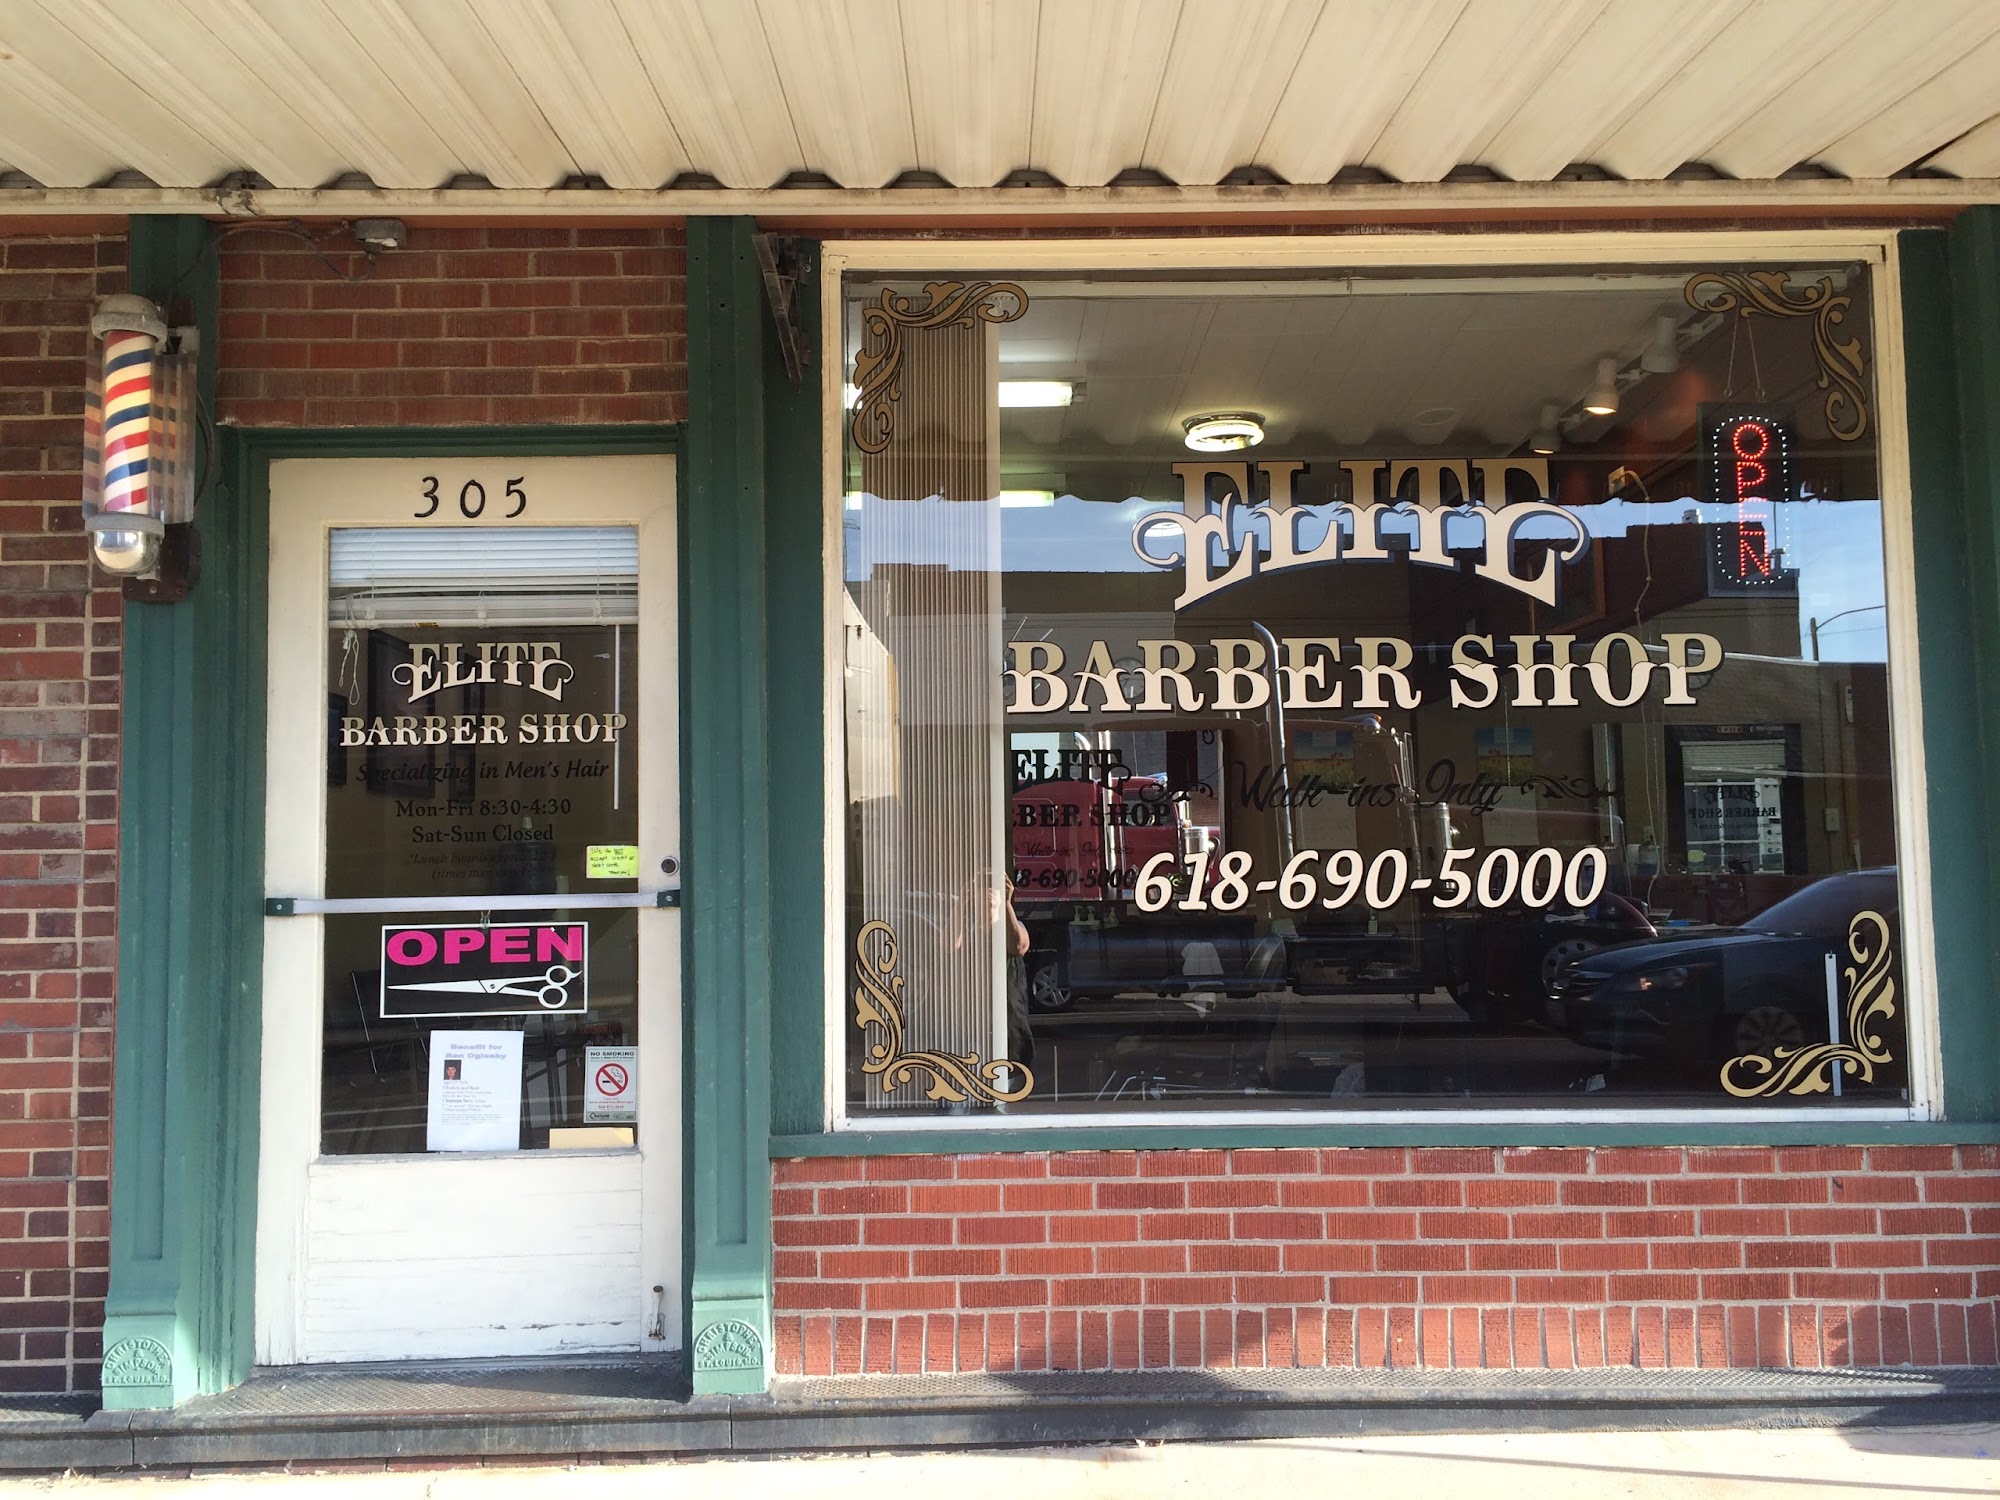 Elite Barber Shop 305 W College Ave, Greenville Illinois 62246